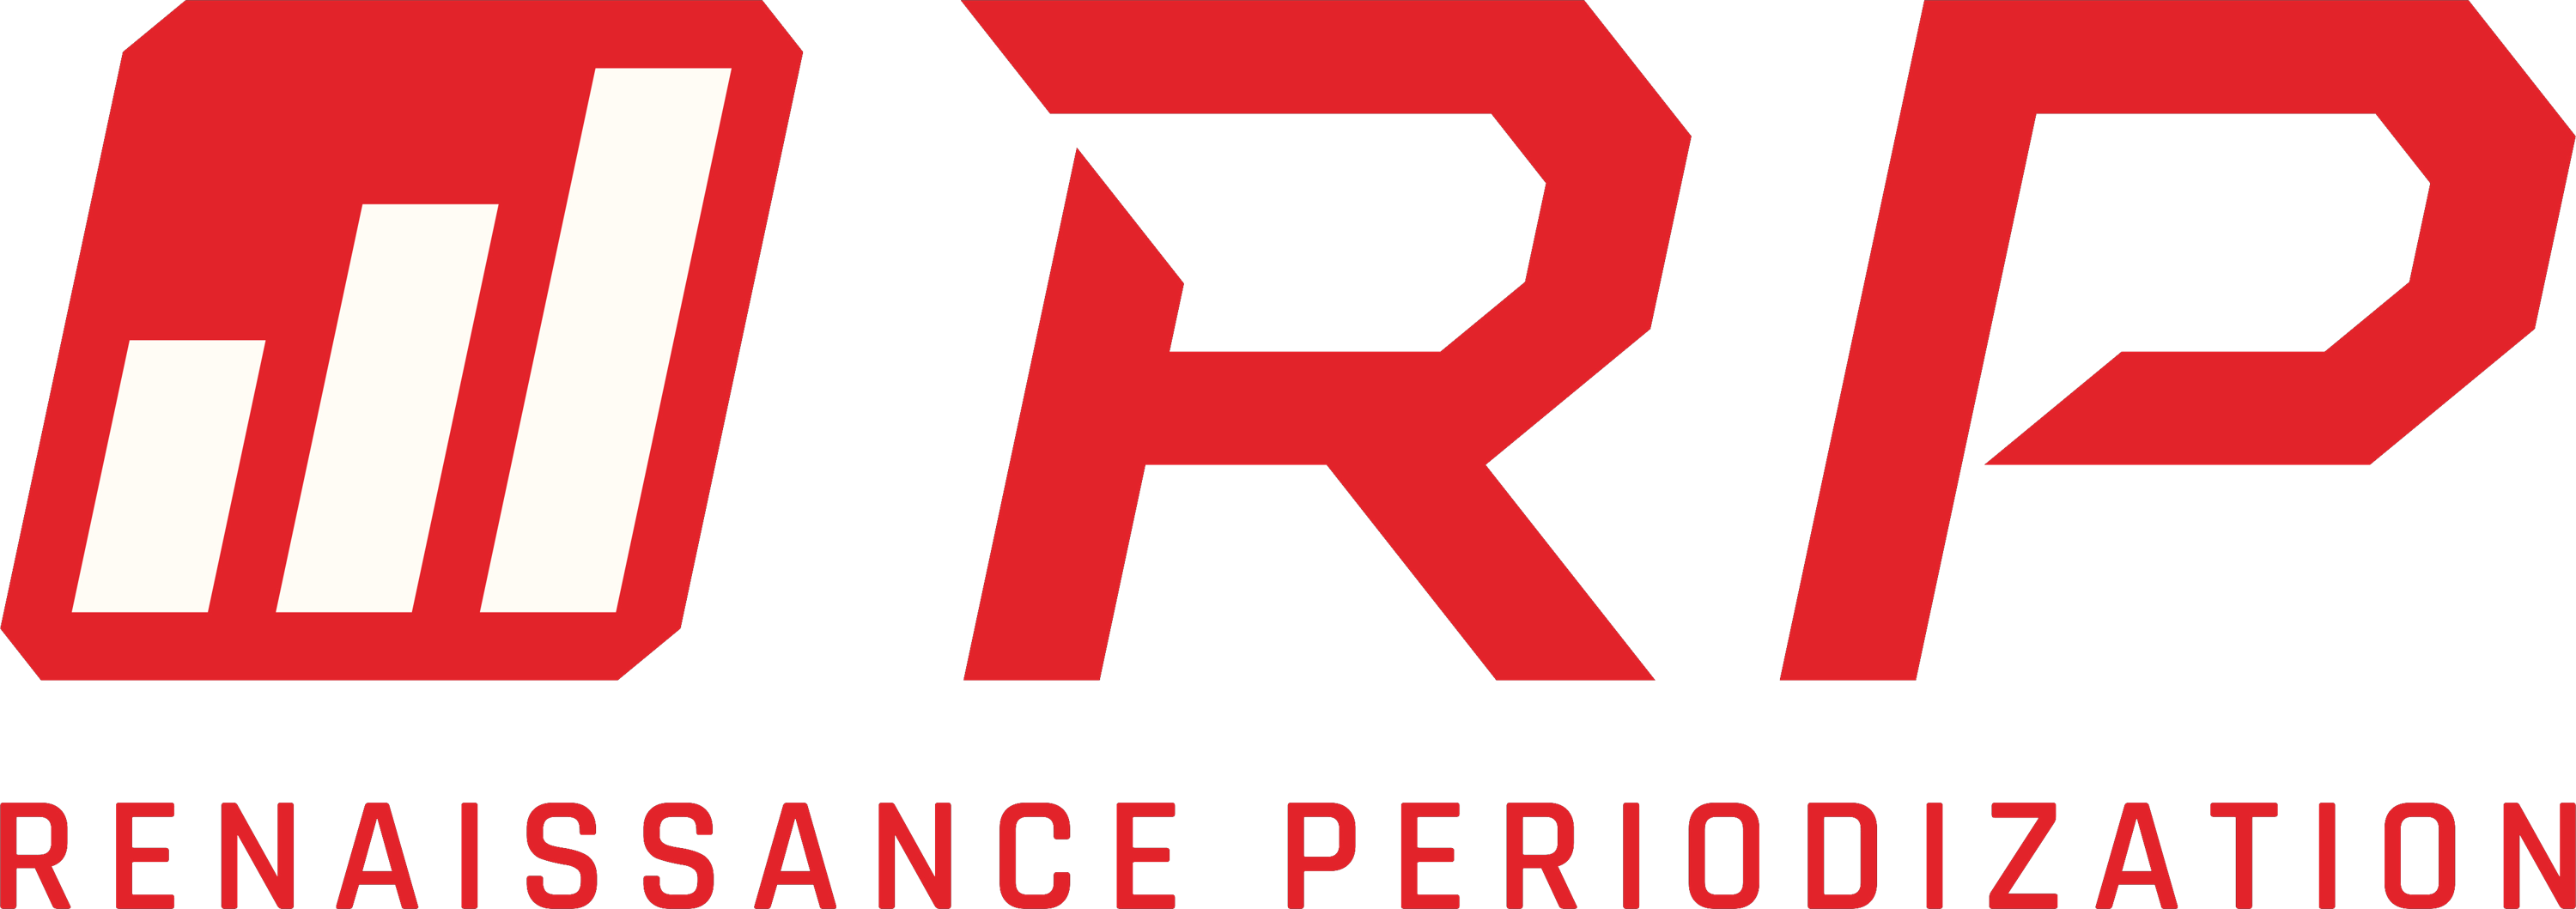 Renaissance periodization logo